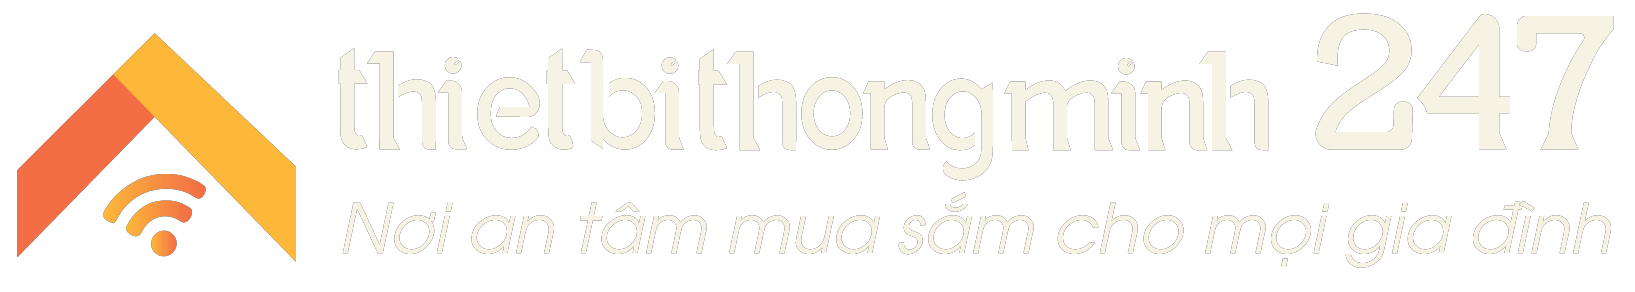 logo Thietbithongminh247.com - Nơi an tâm mua sắm cho mọi gia đình